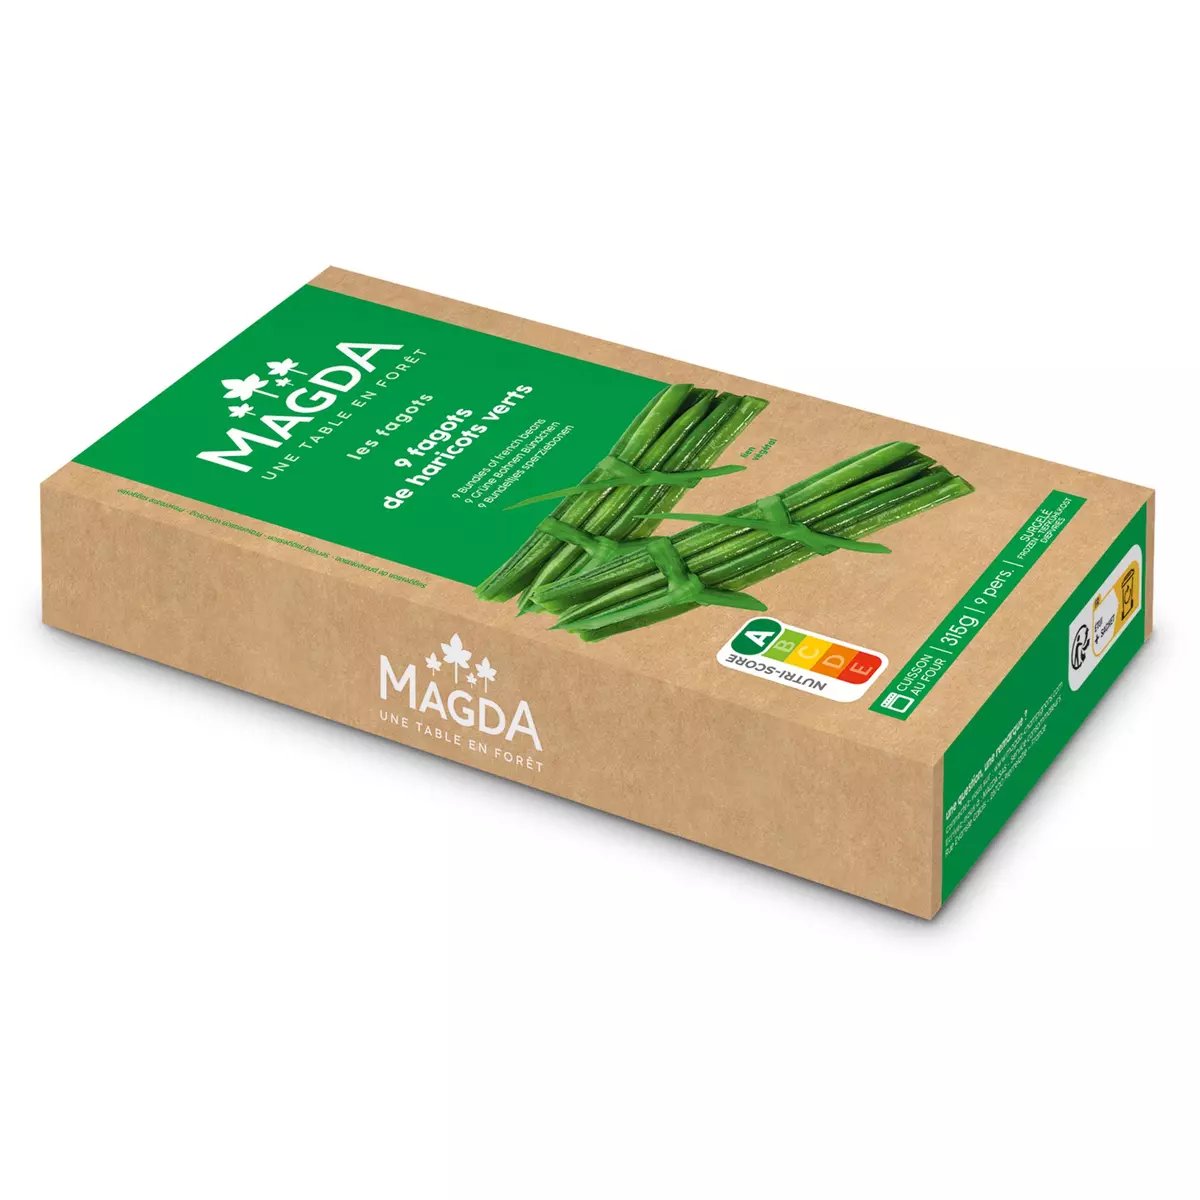 MAGDA Fagots de haricots verts lien végétal 9 pièces 315g